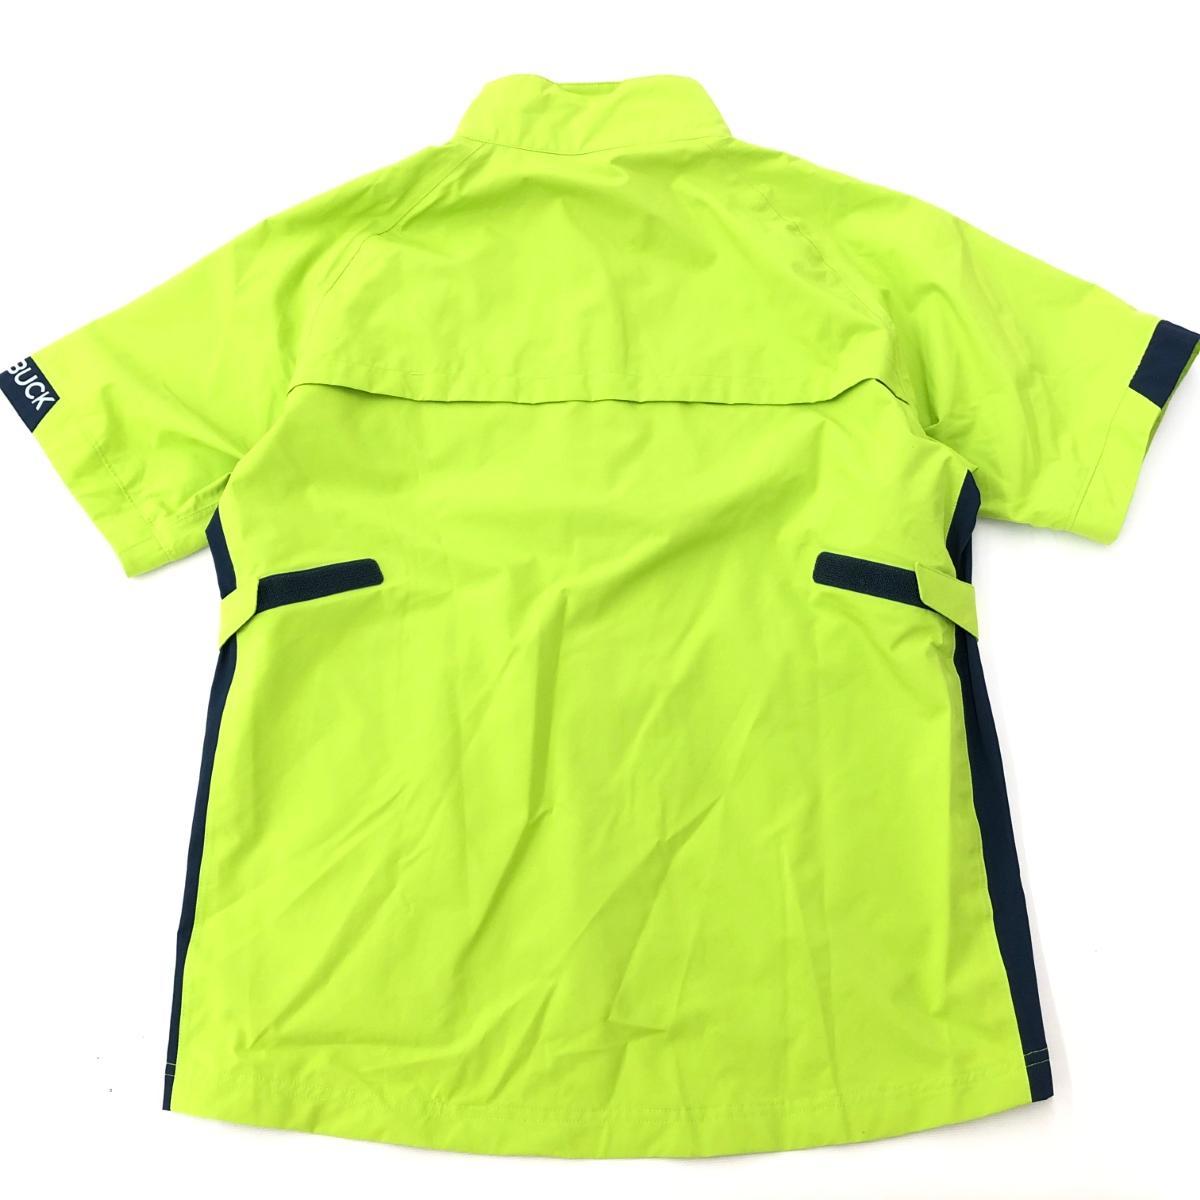  excellent *Cutter&Buck Cutter&Buck rainwear short sleeves jacket M pants L*CGMNJH00W green × navy men's Golf wear 